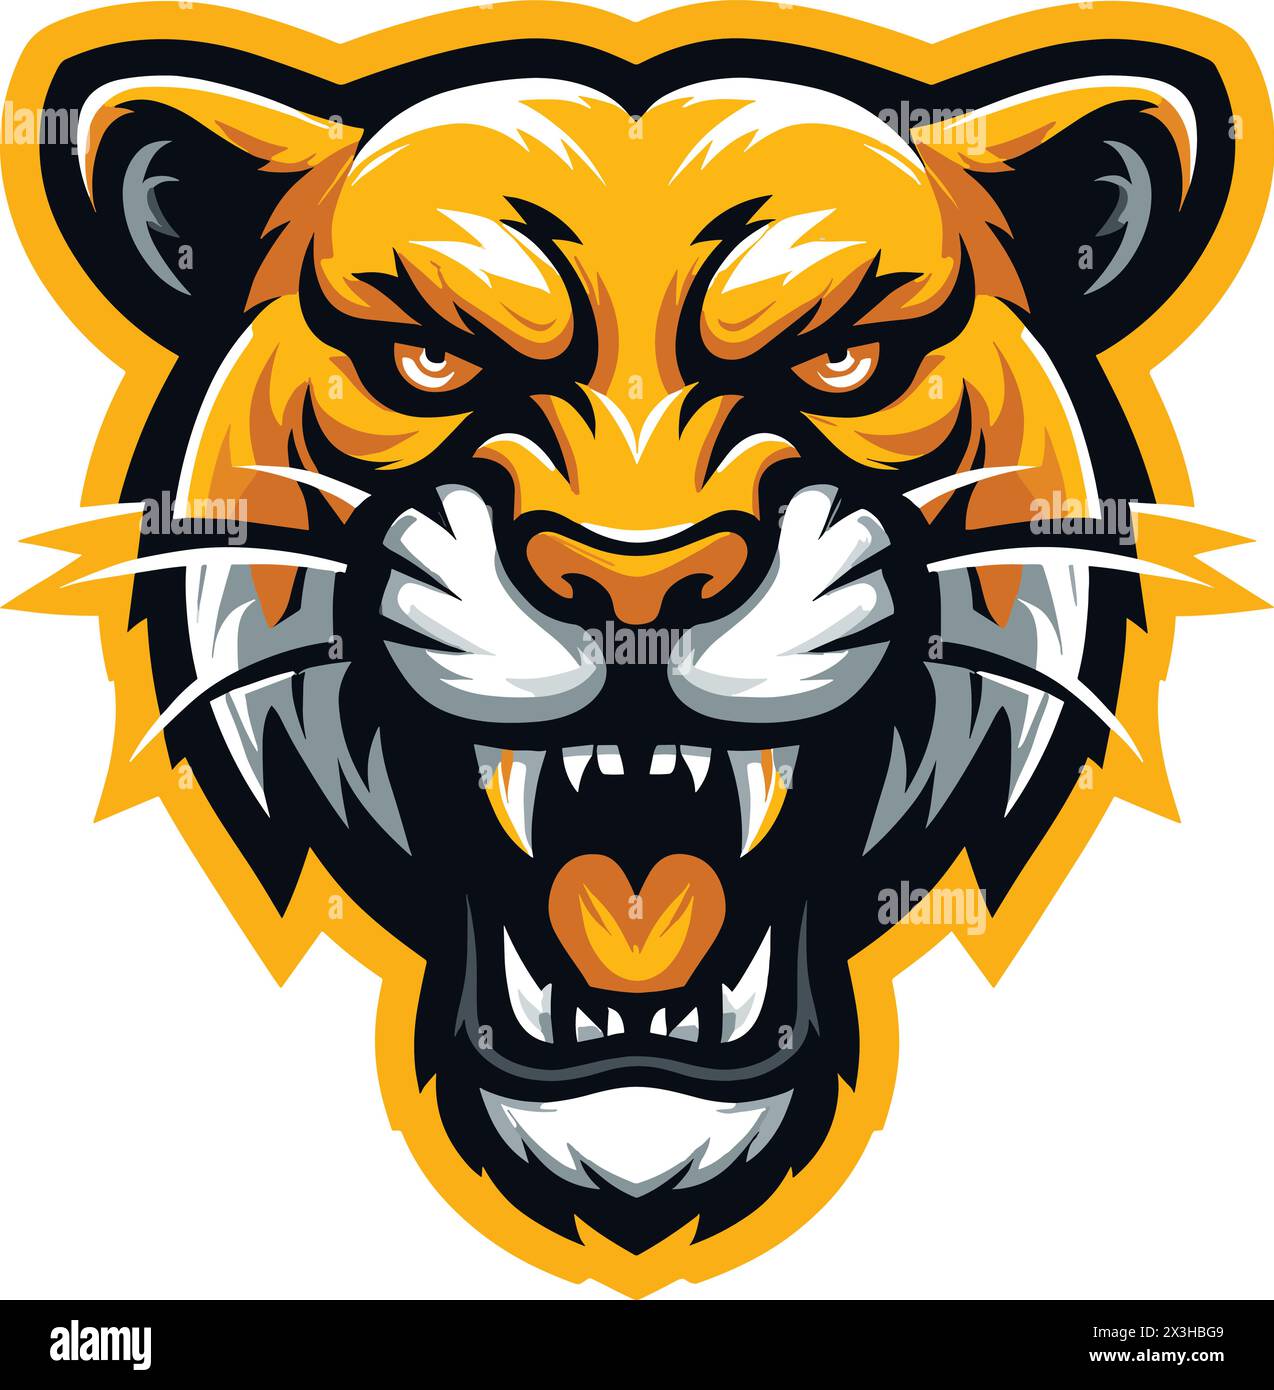 Roaring tiger head mascot logo Stock Vector